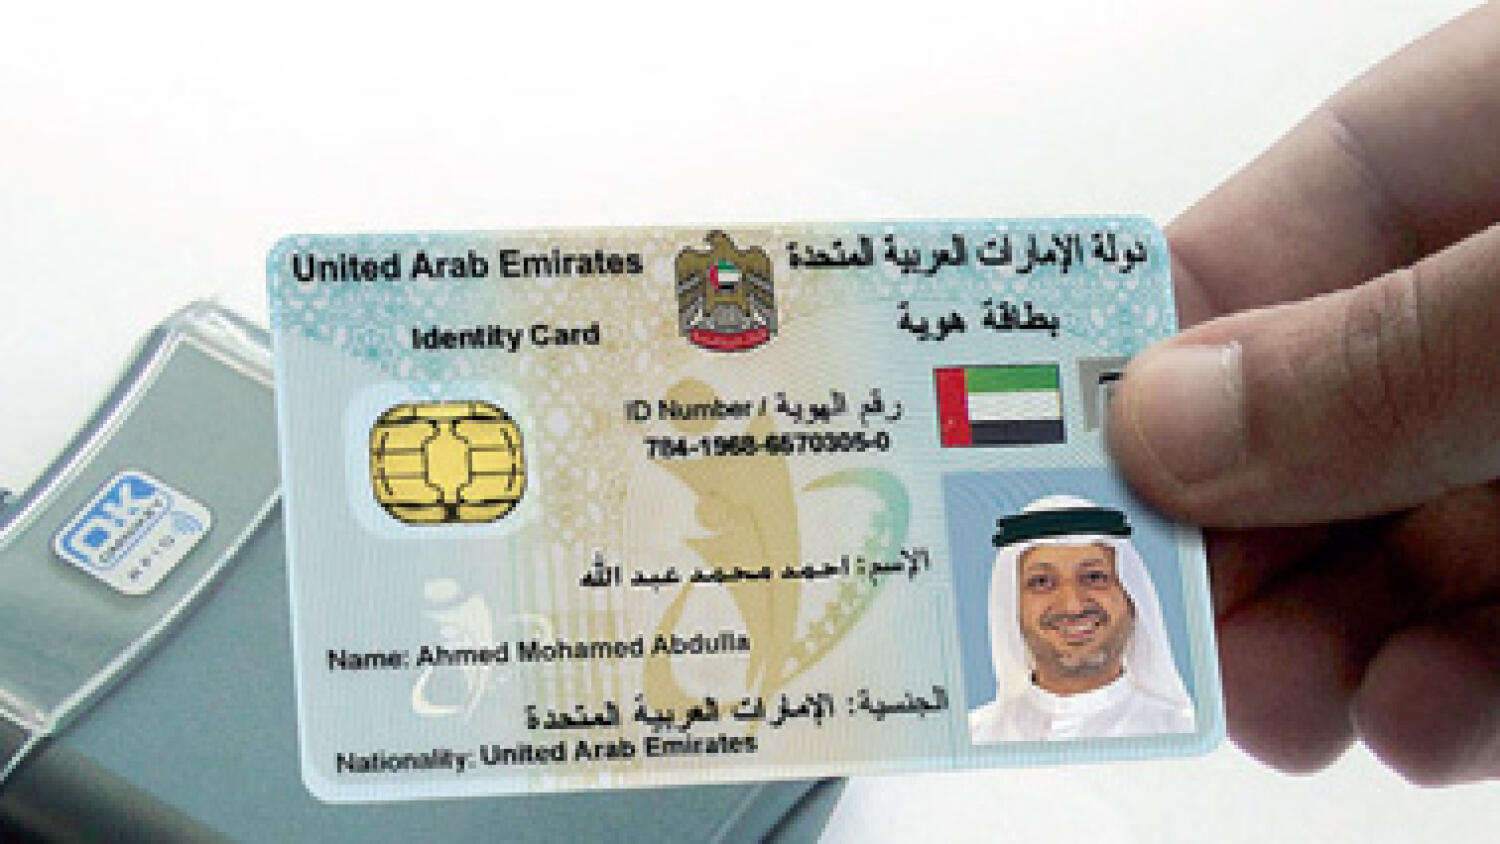 Uae visa. Виза ОАЭ. Эмиратская виза. ID Card UAE. Виза ОАЭ фото.